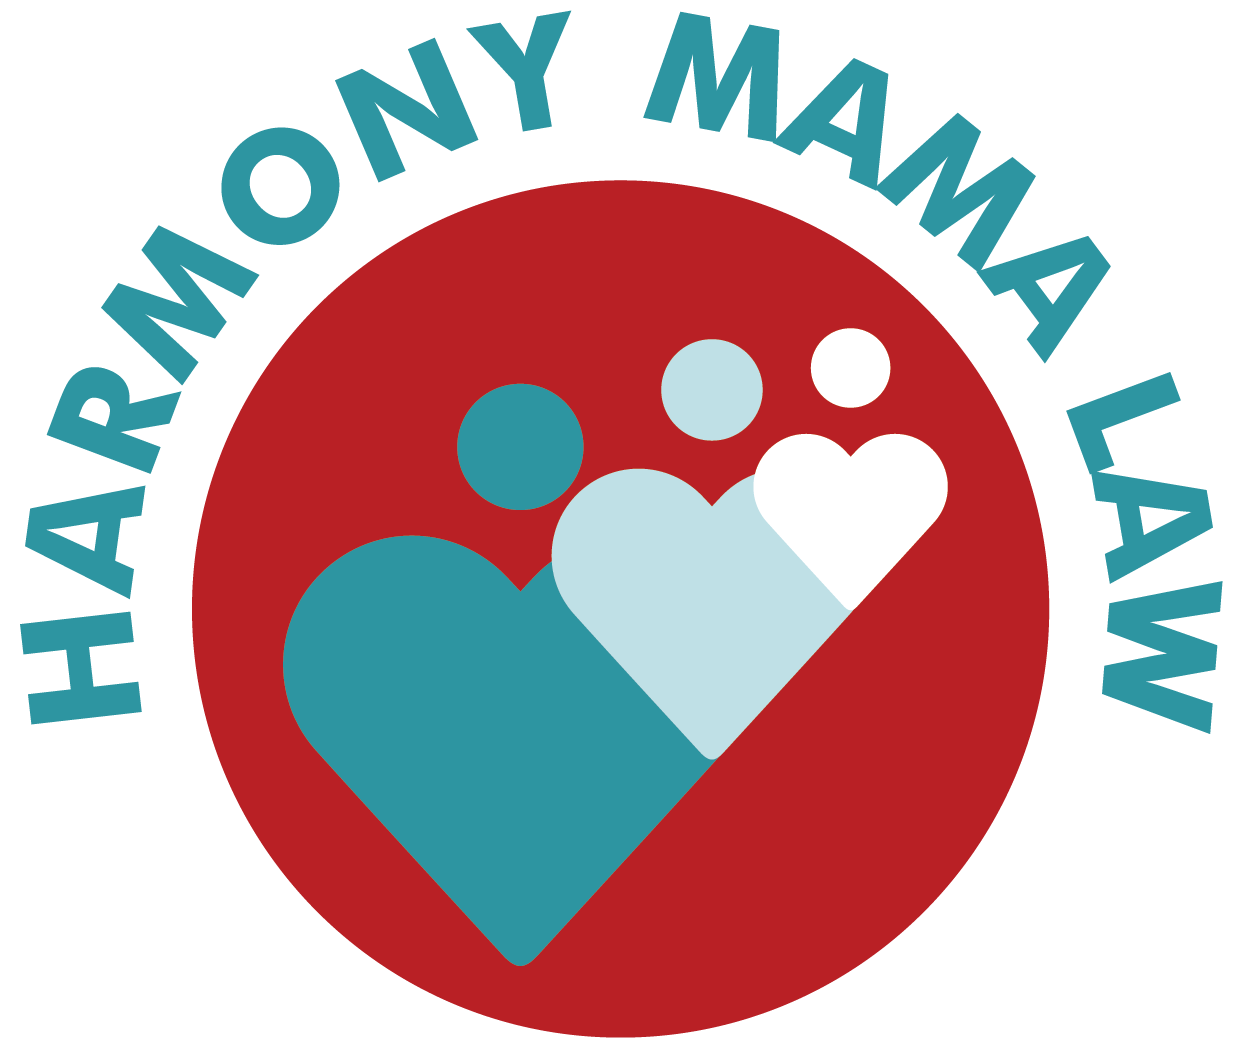 Harmony Mama Law logo and badge